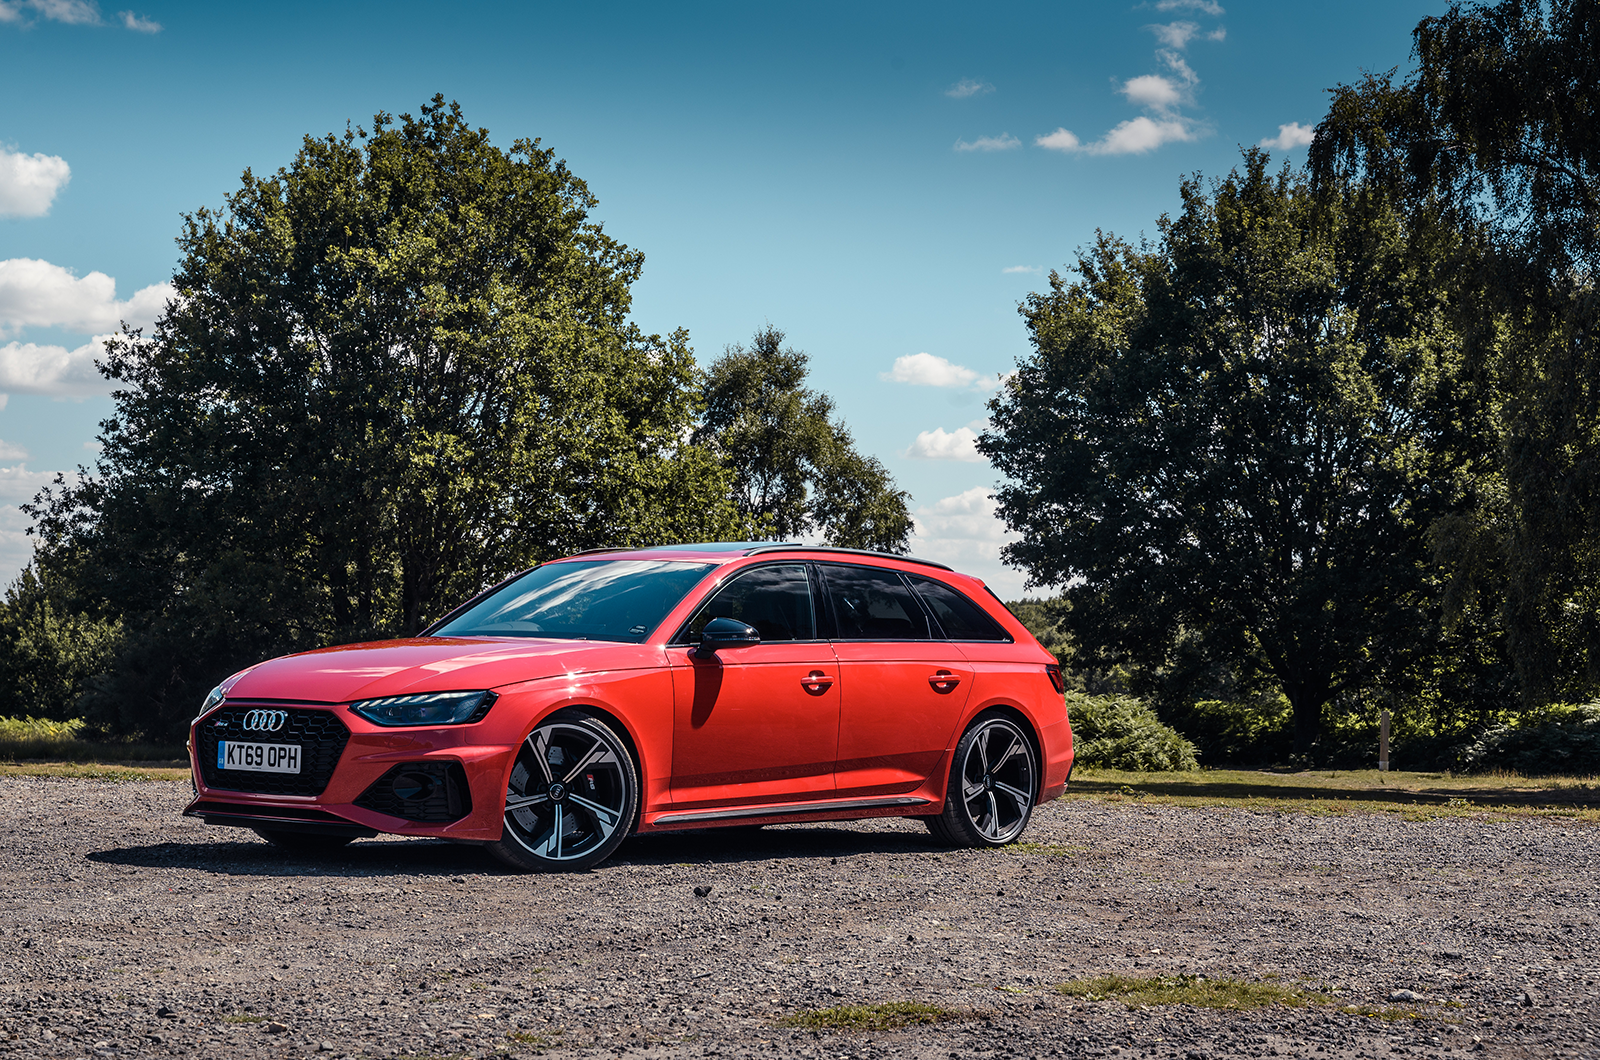 Classic & Sports Car – Future classic: Audi RS4 Avant